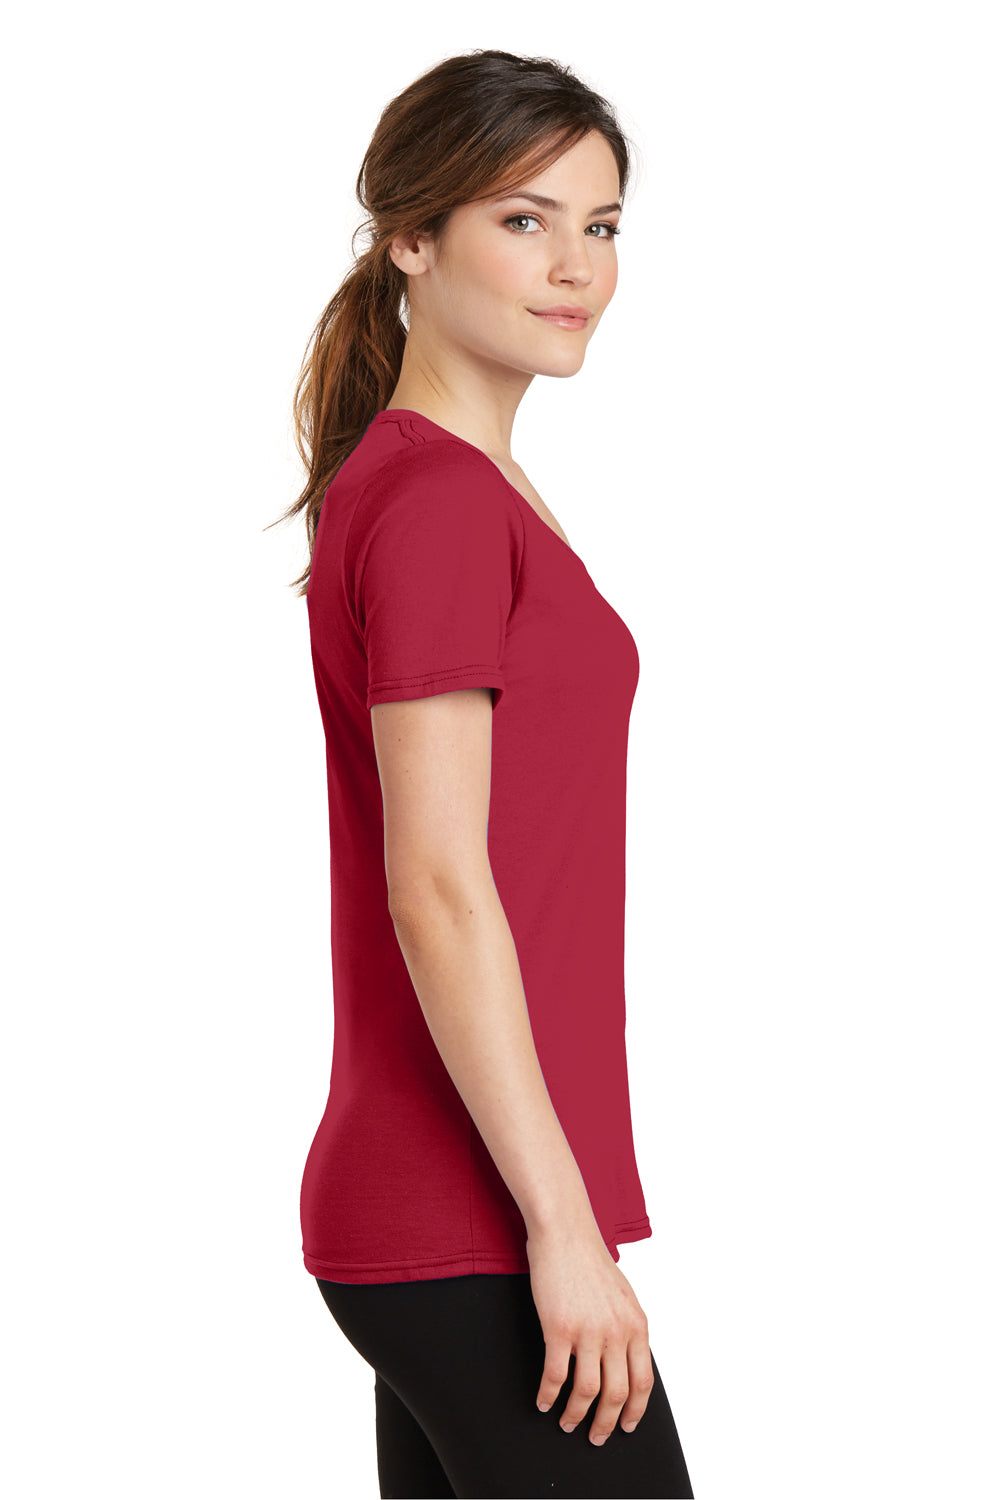 Port & Company LPC381V Womens Dry Zone Performance Moisture Wicking Short Sleeve V-Neck T-Shirt Red Side